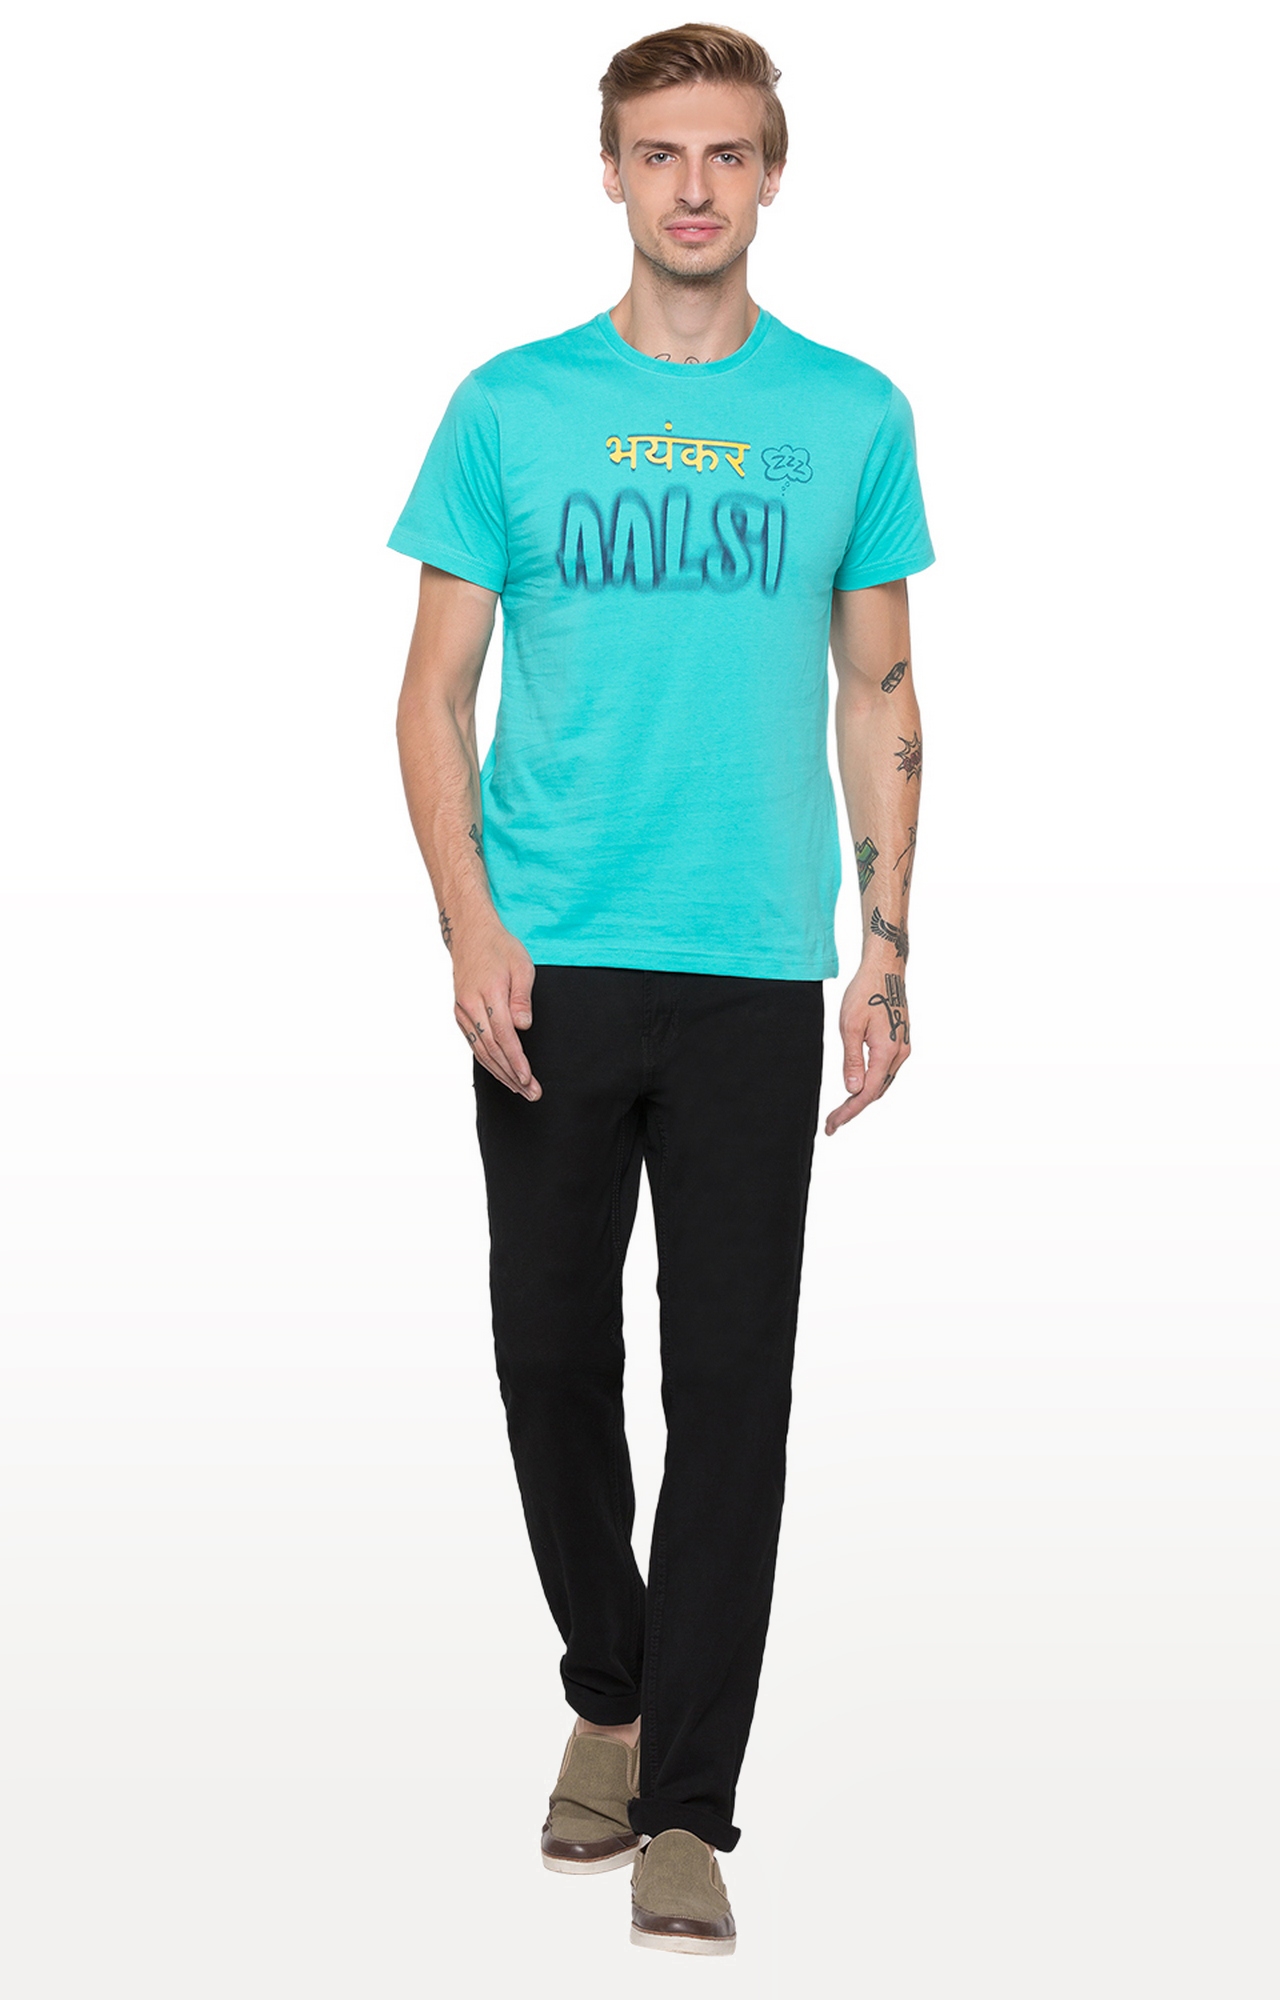 globus | Green Printed T-Shirt 1